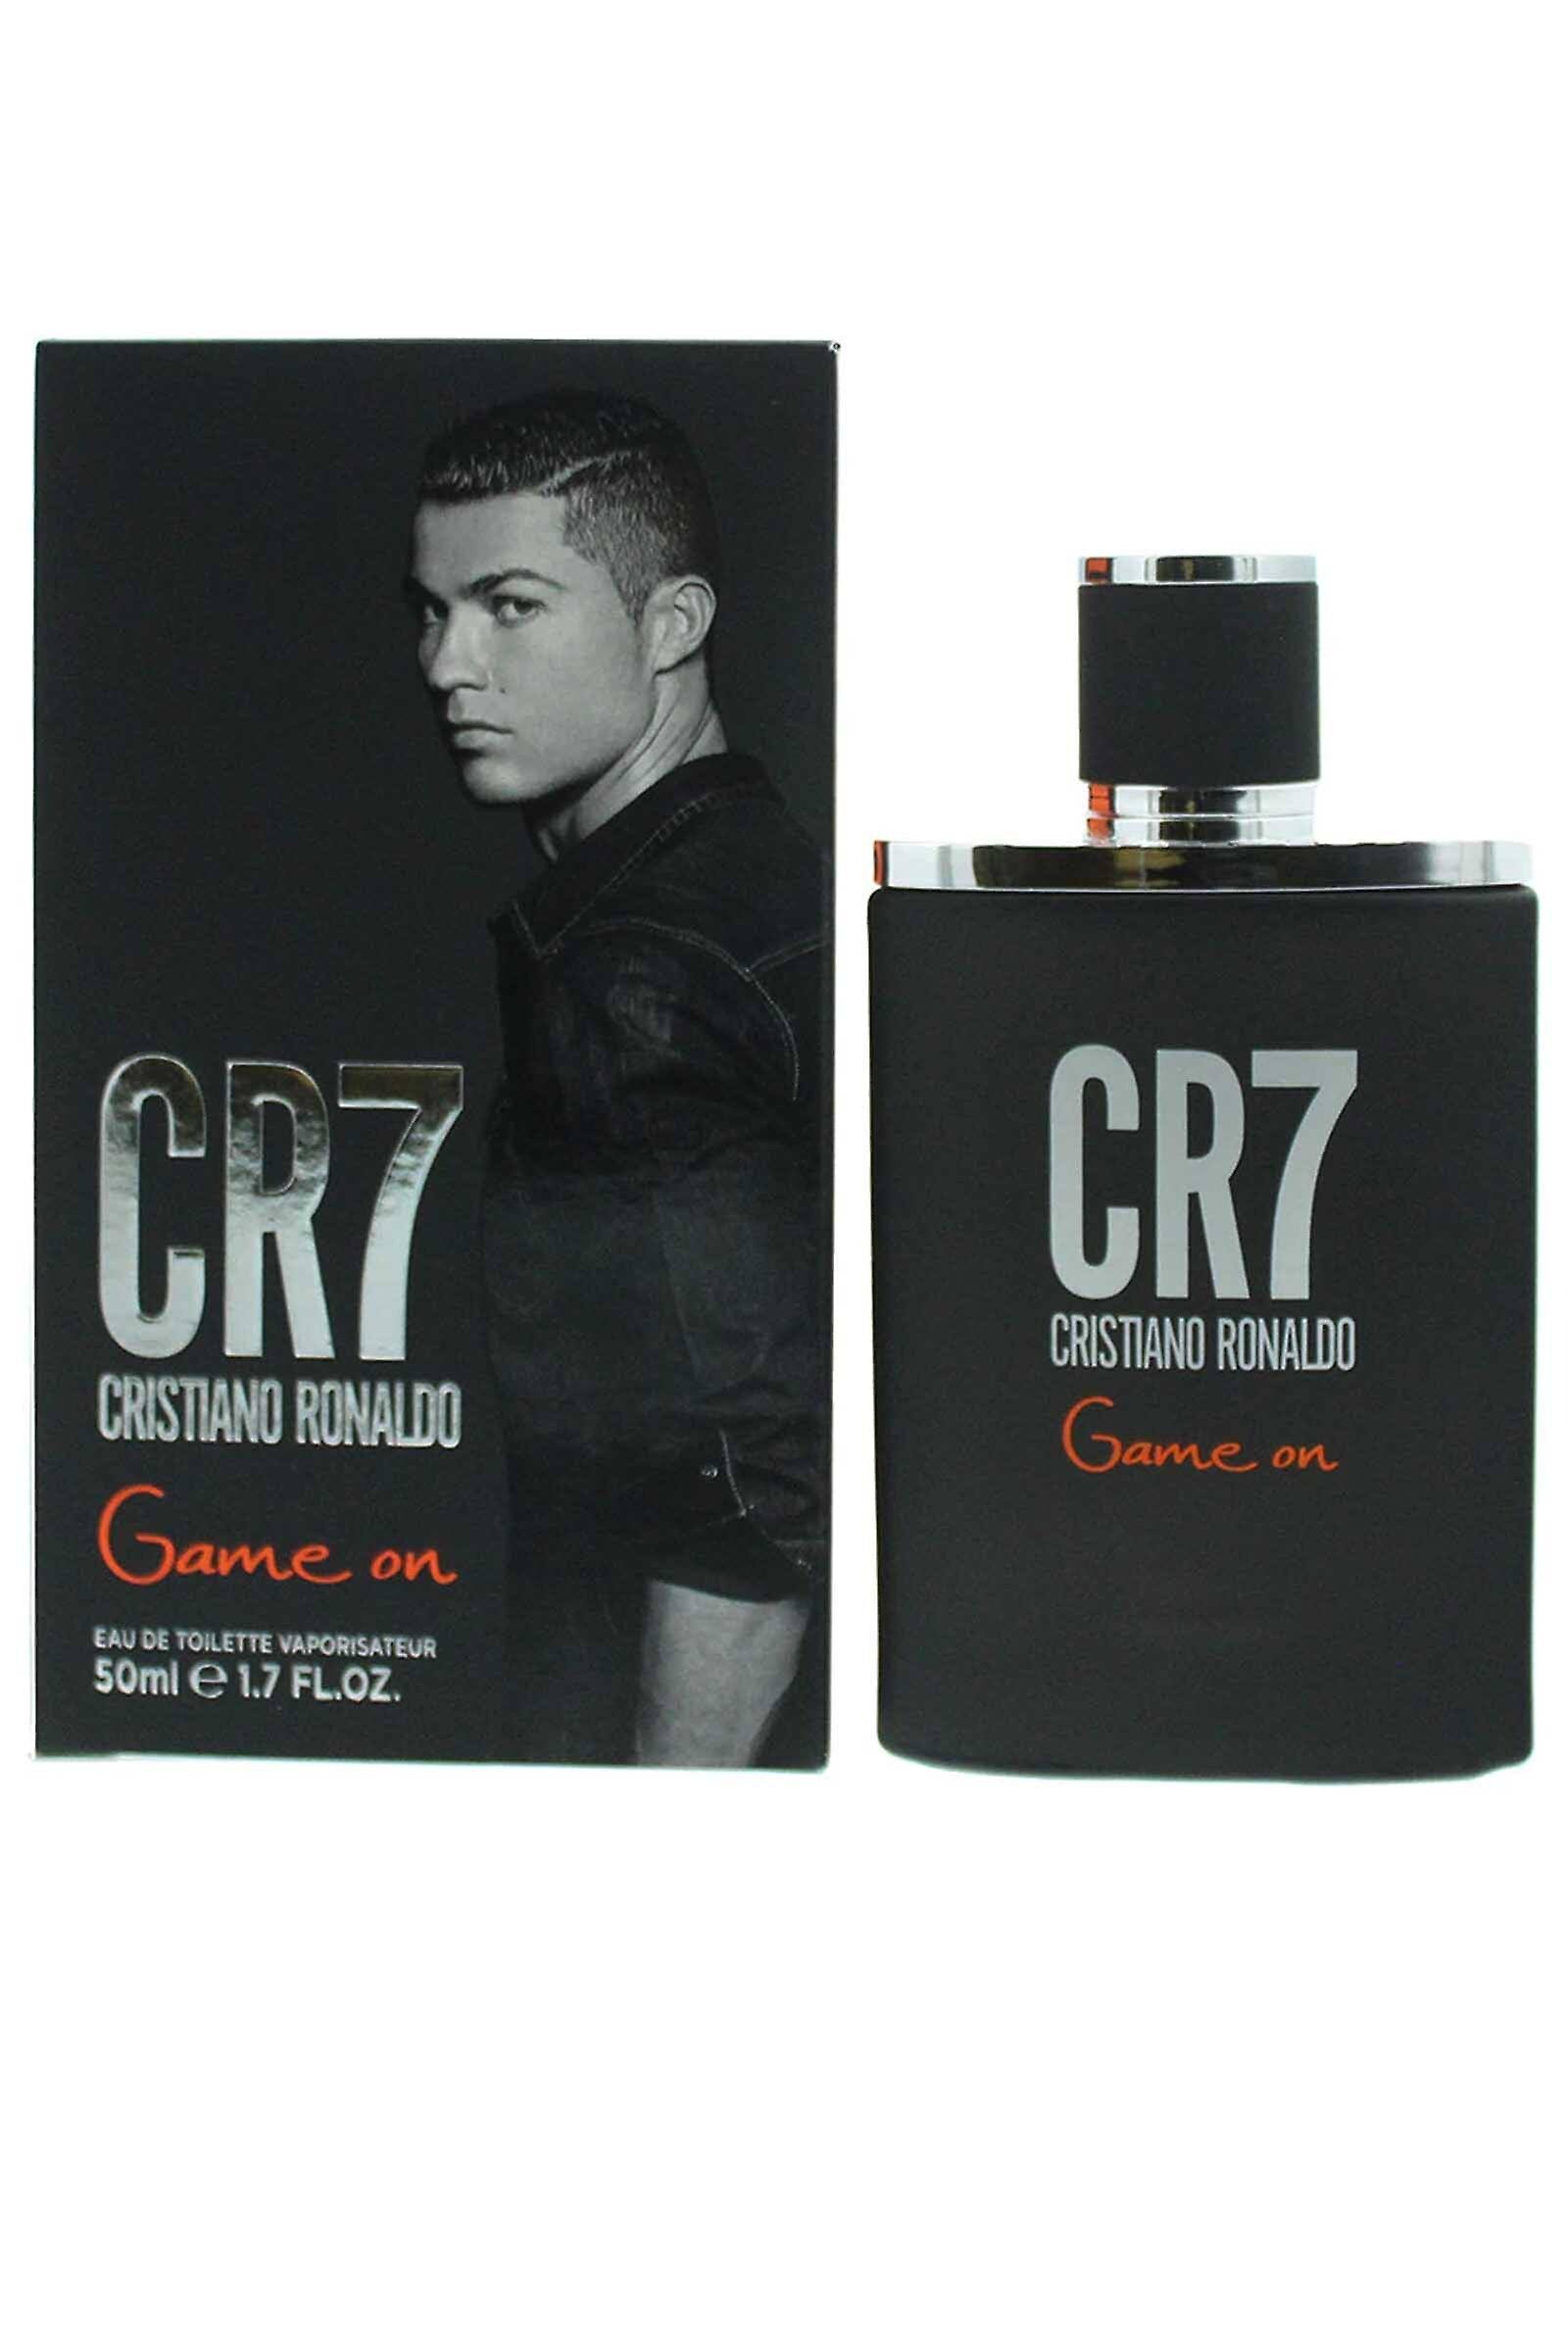 CR7 Game on by Cristiano Ronaldo for Men - 1.7 oz EDT Spray